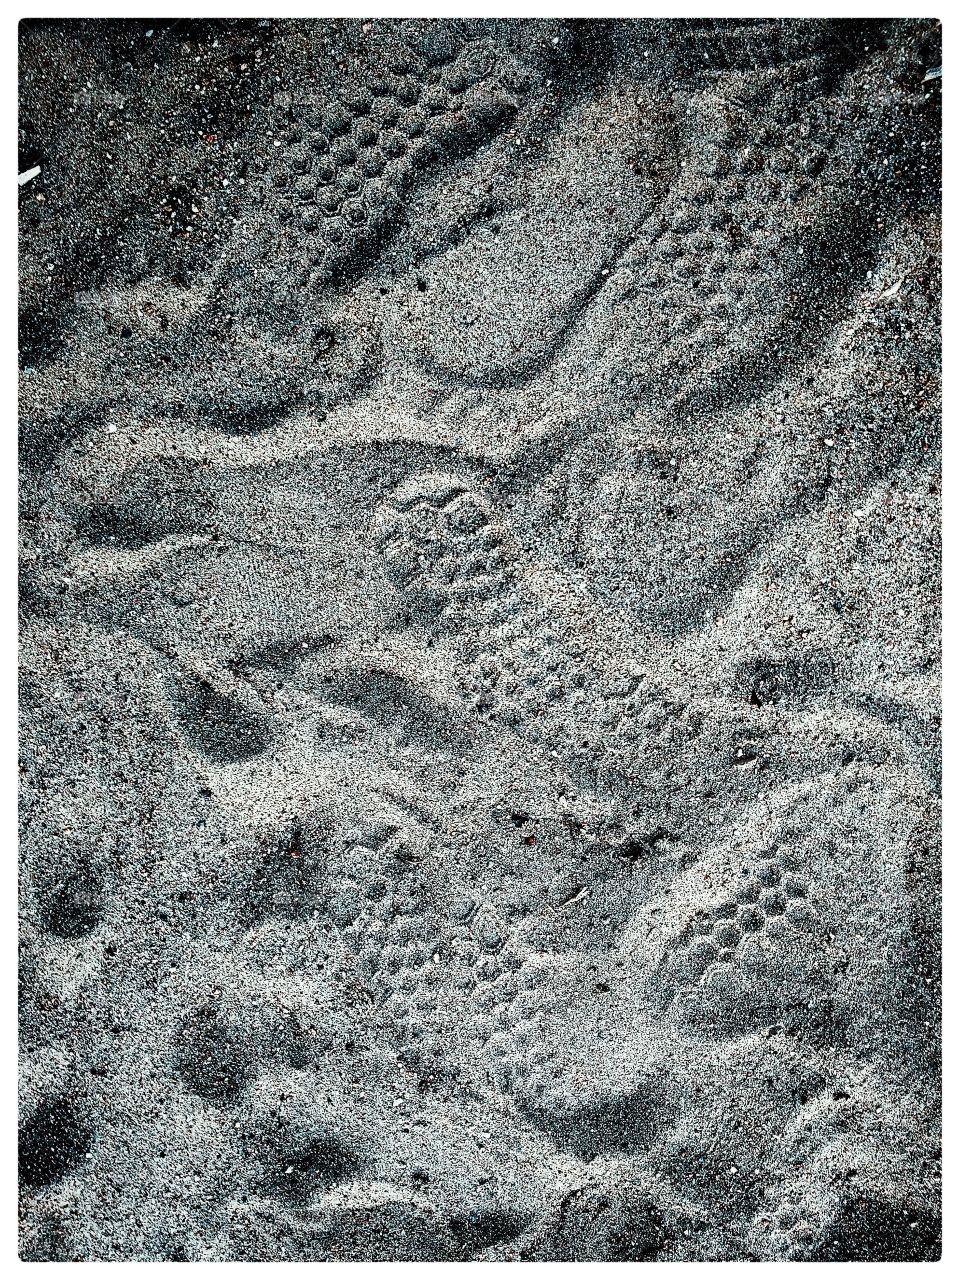 sand texture02